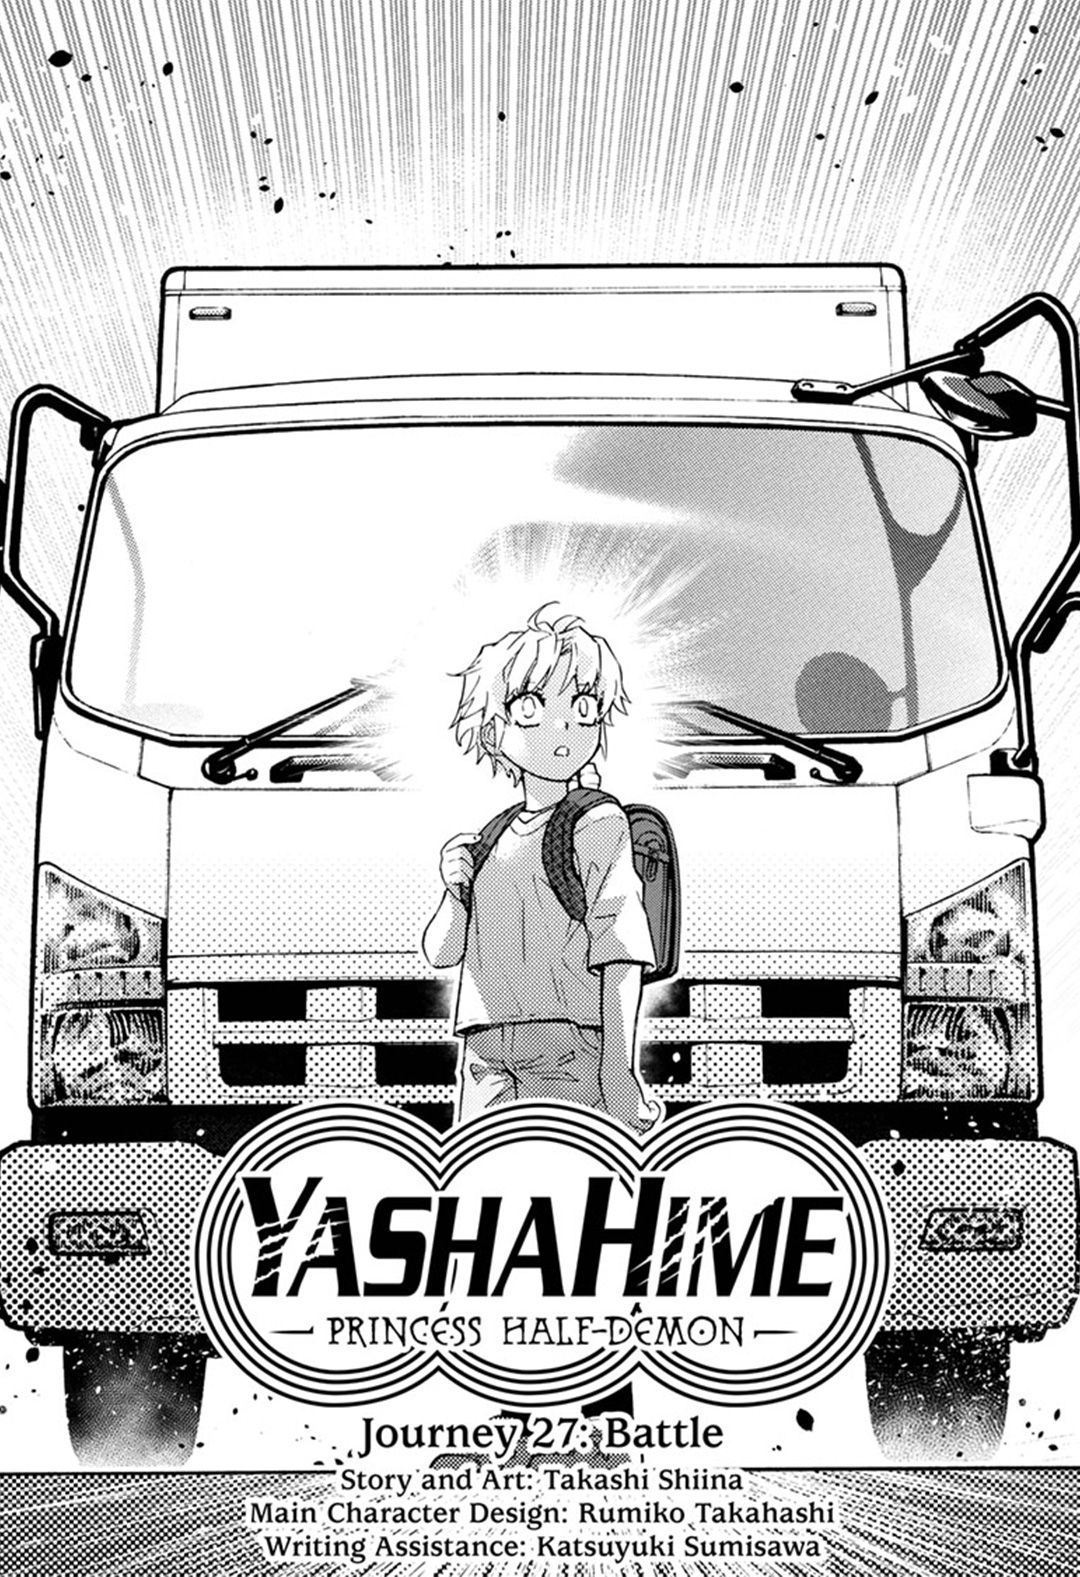 VIZ  Read Yashahime: Princess Half-Demon, Chapter 21 - Explore